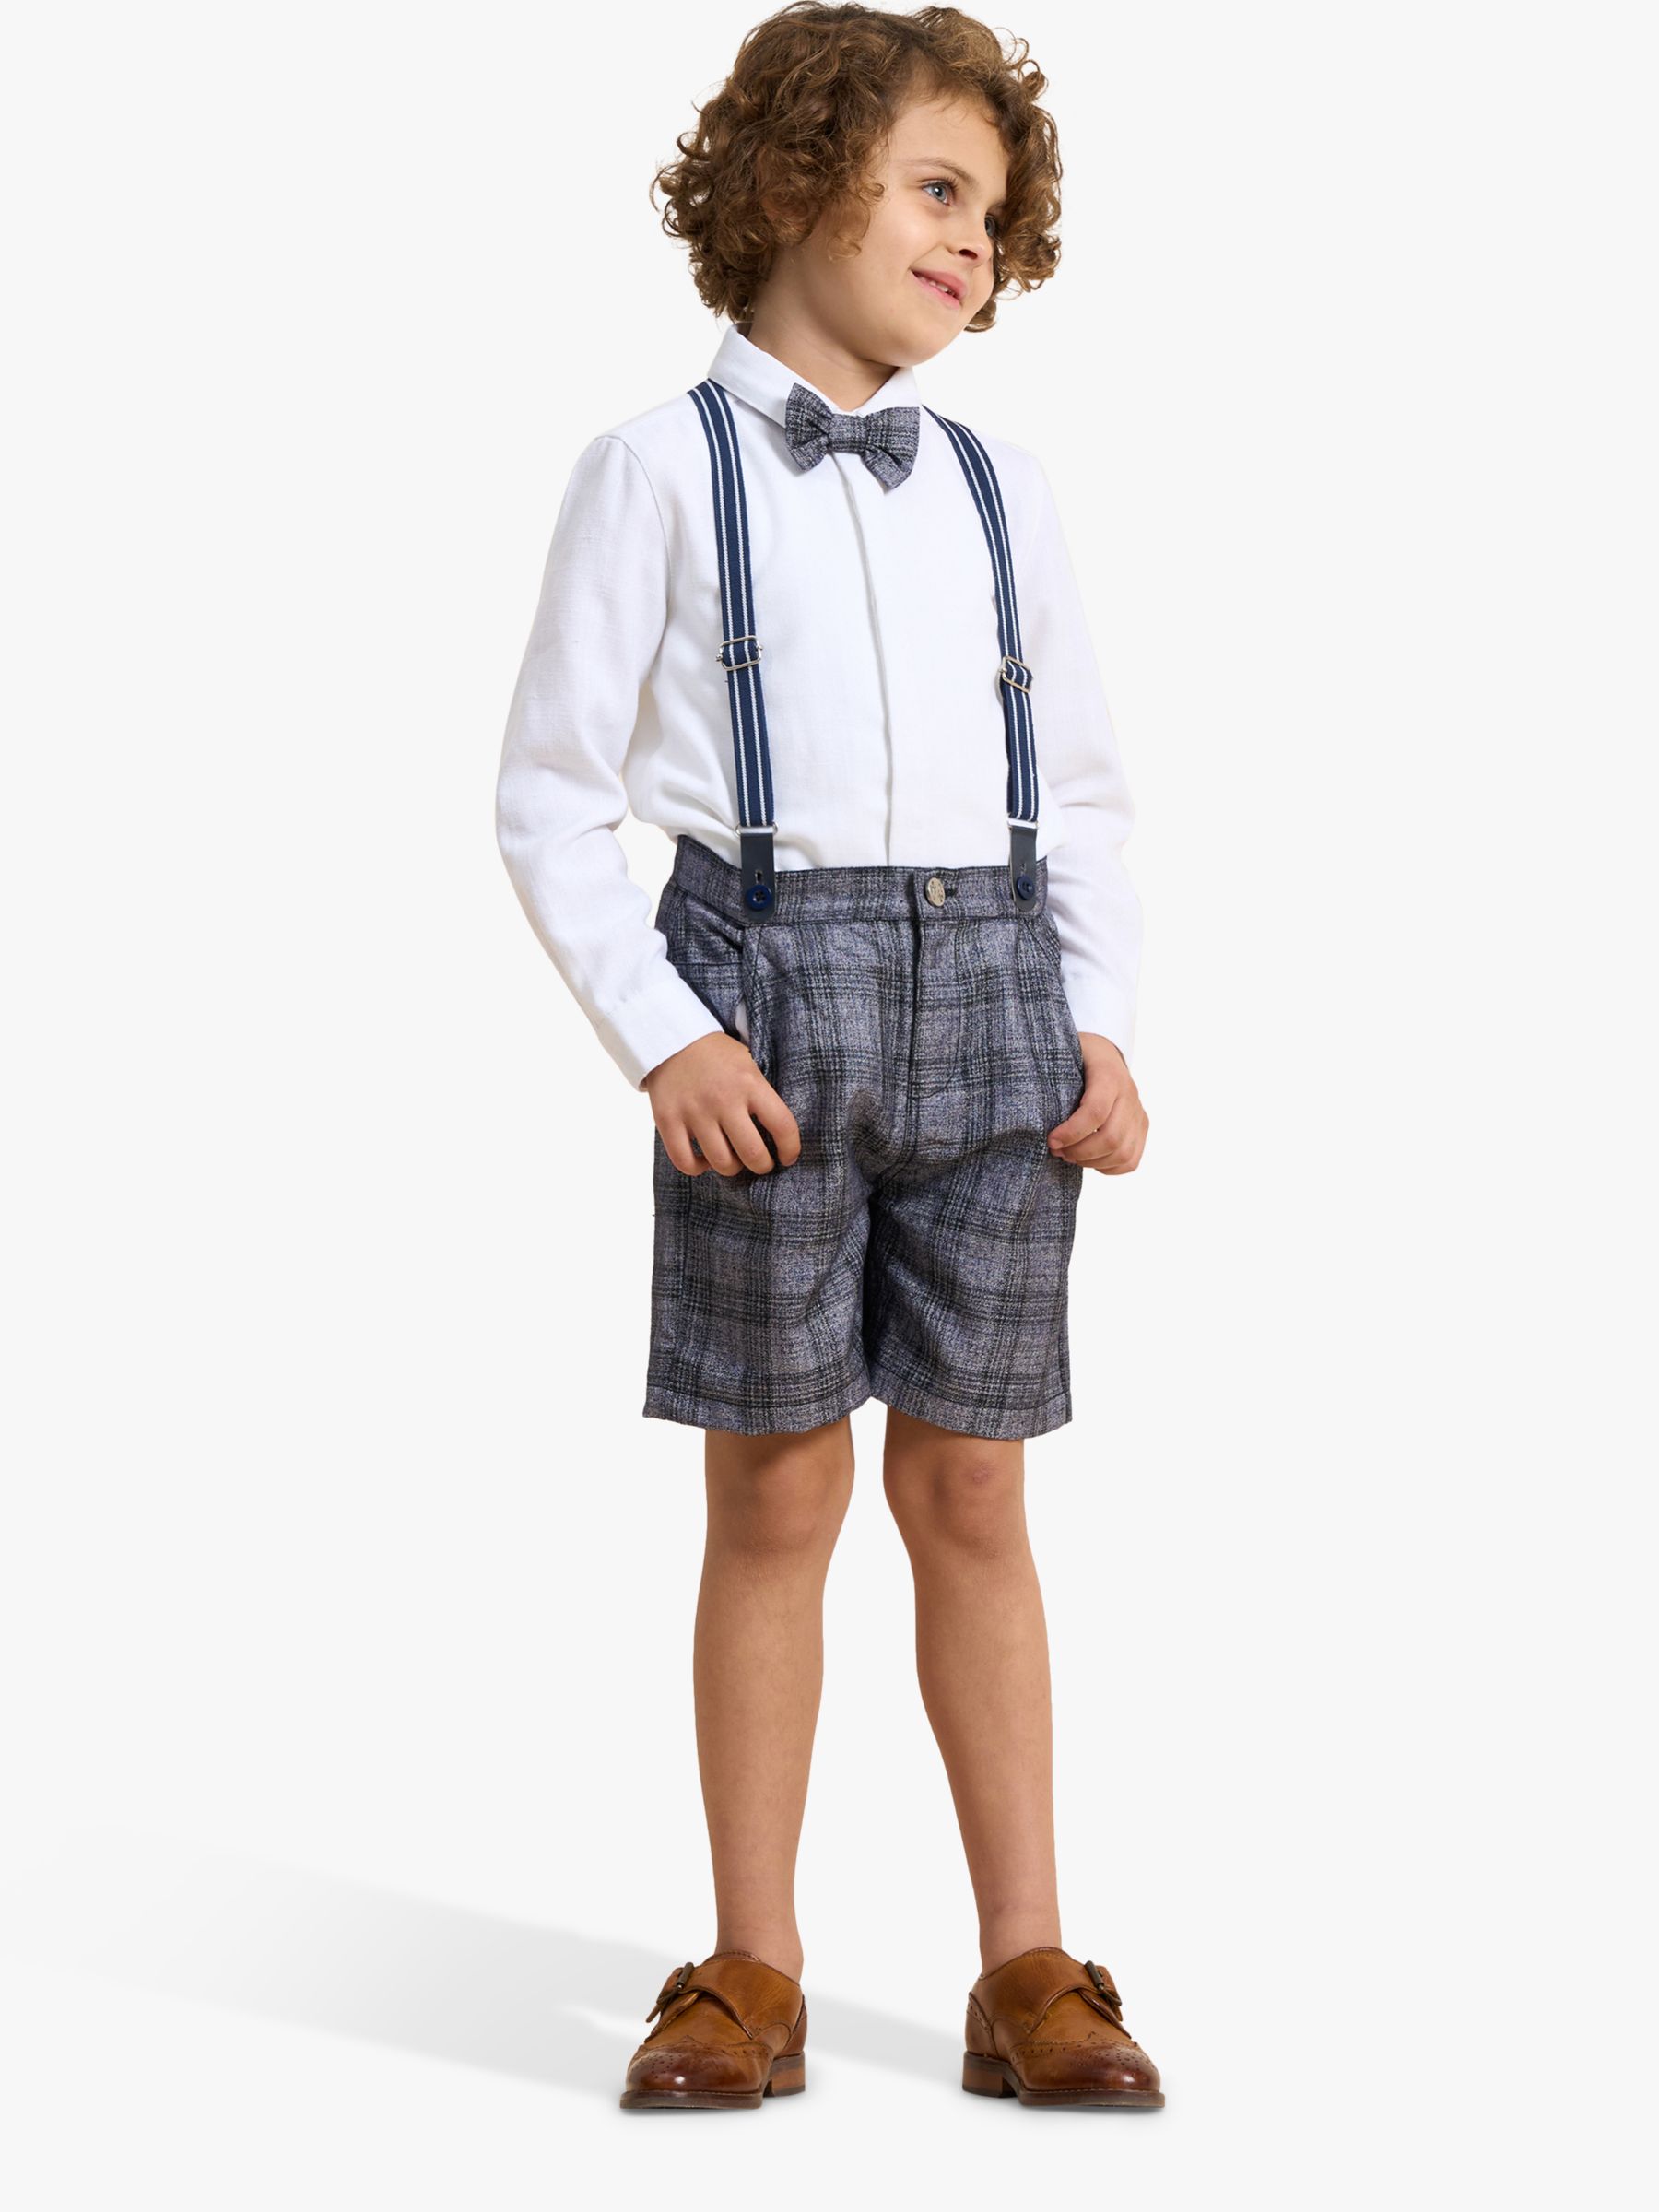 Angel & Rocket Kids' Ronan Smart Shirt and Shorts Set, Blue/White, 2 years